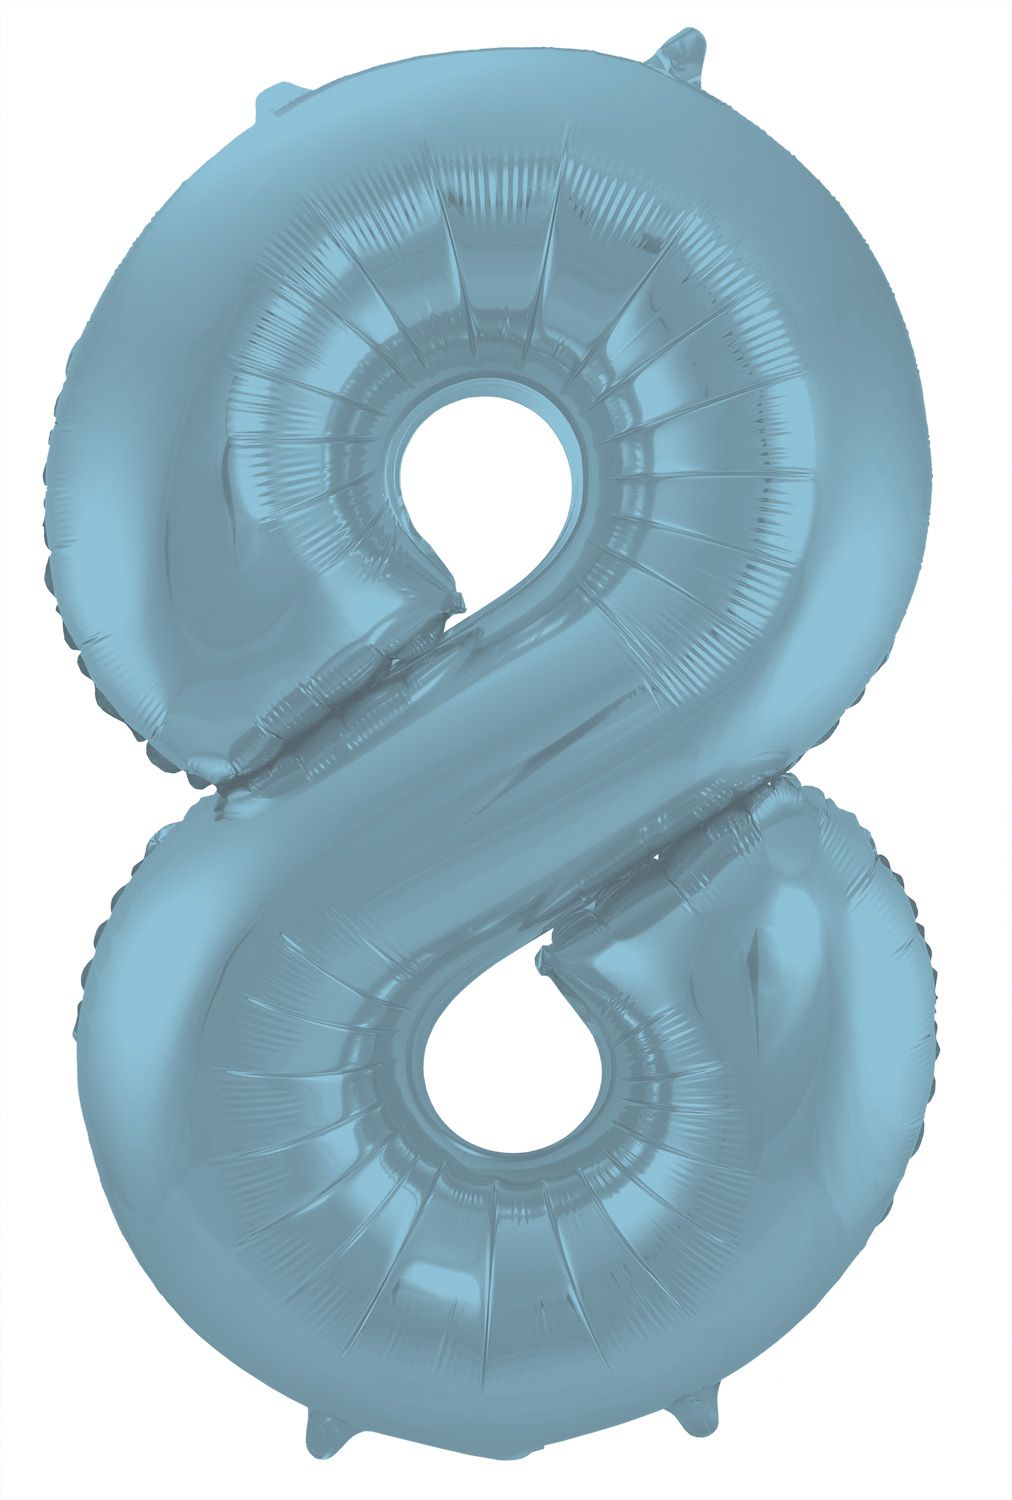 Cijfer 8 pastel blauw folieballon 86cm